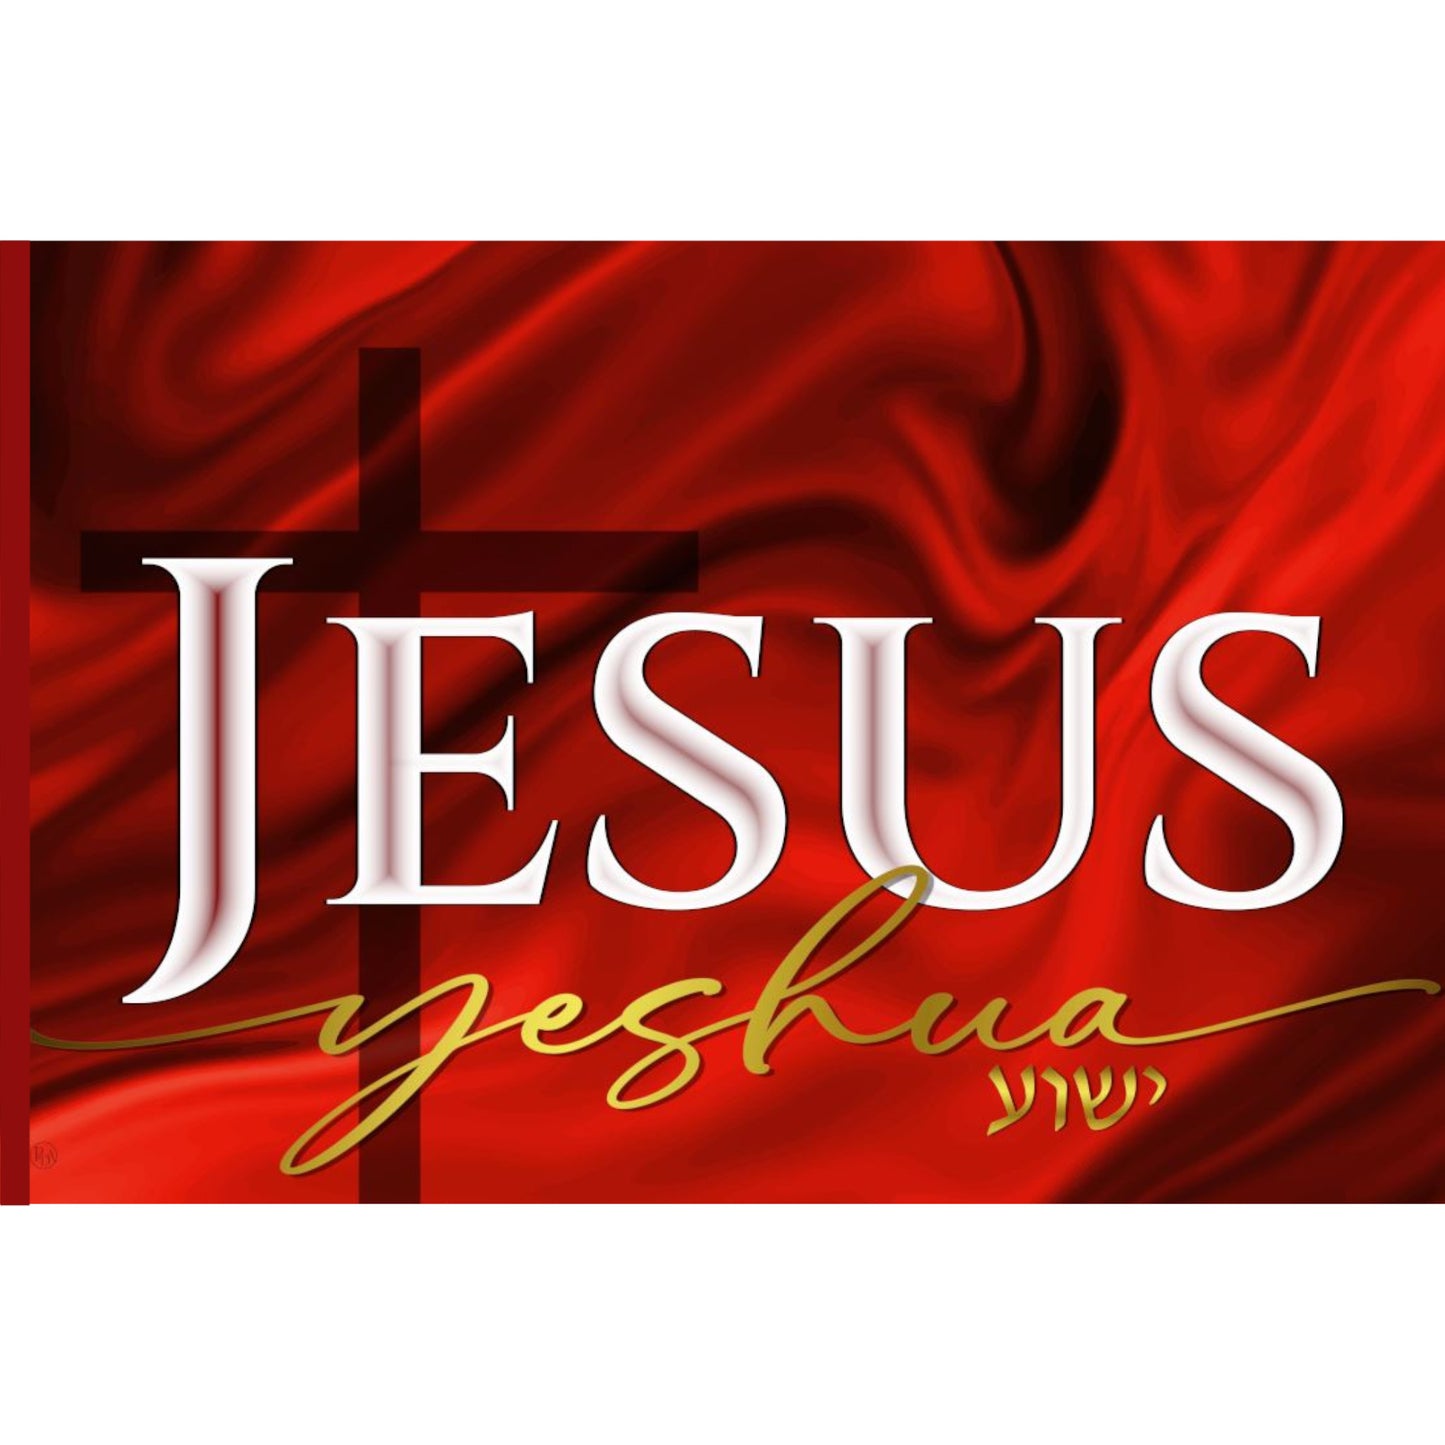 The Name - Jesus